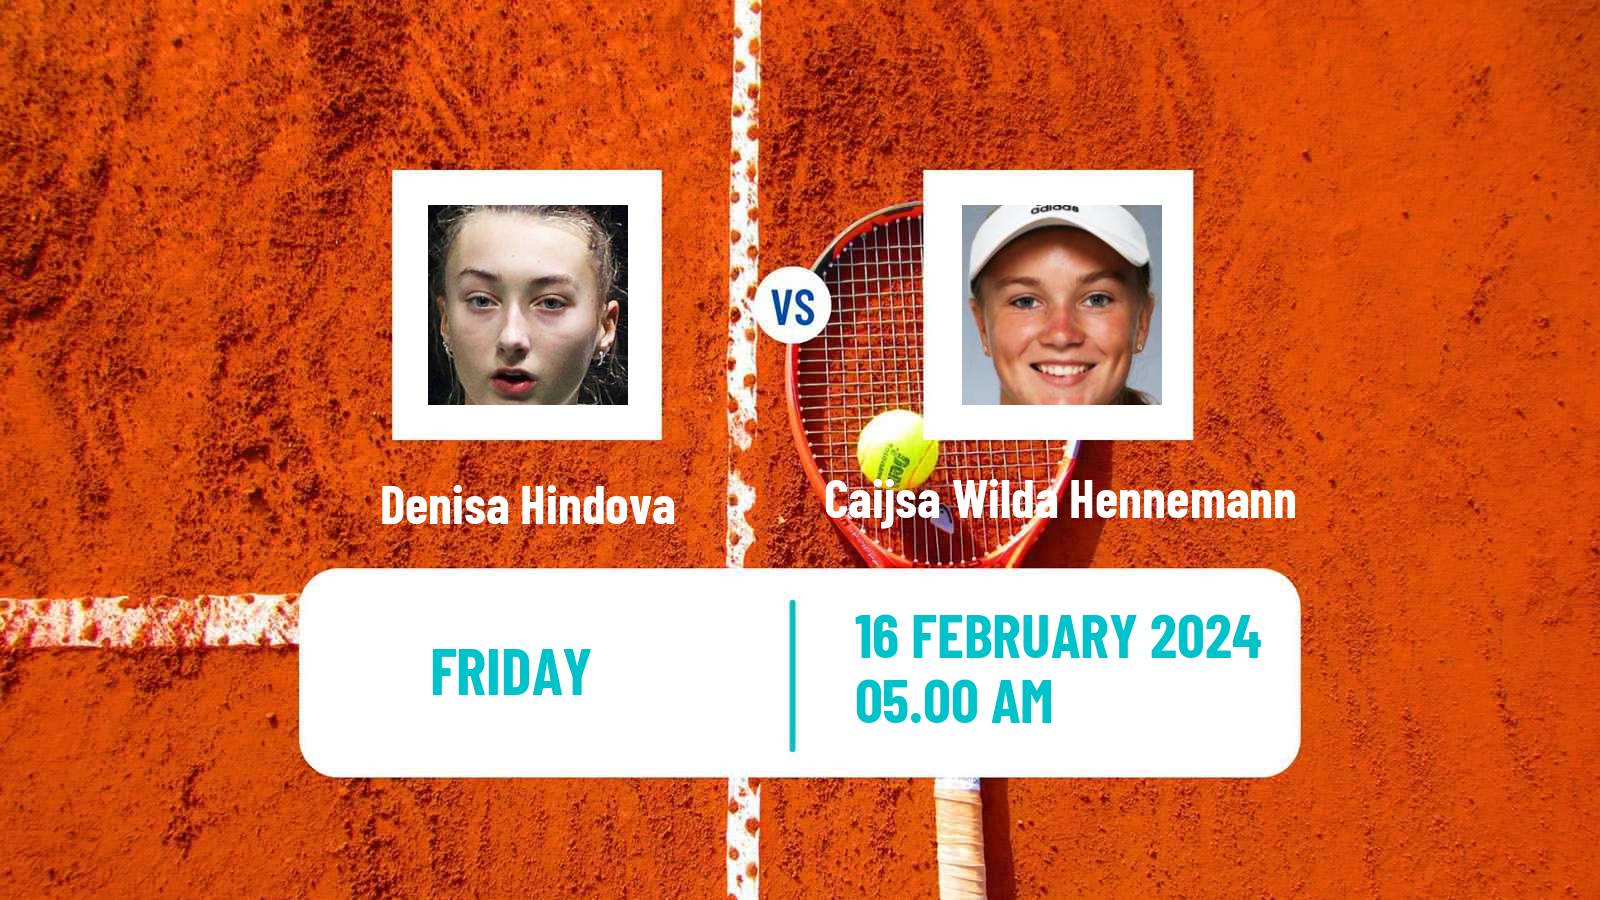 Tennis ITF W15 Manacor Women Denisa Hindova - Caijsa Wilda Hennemann